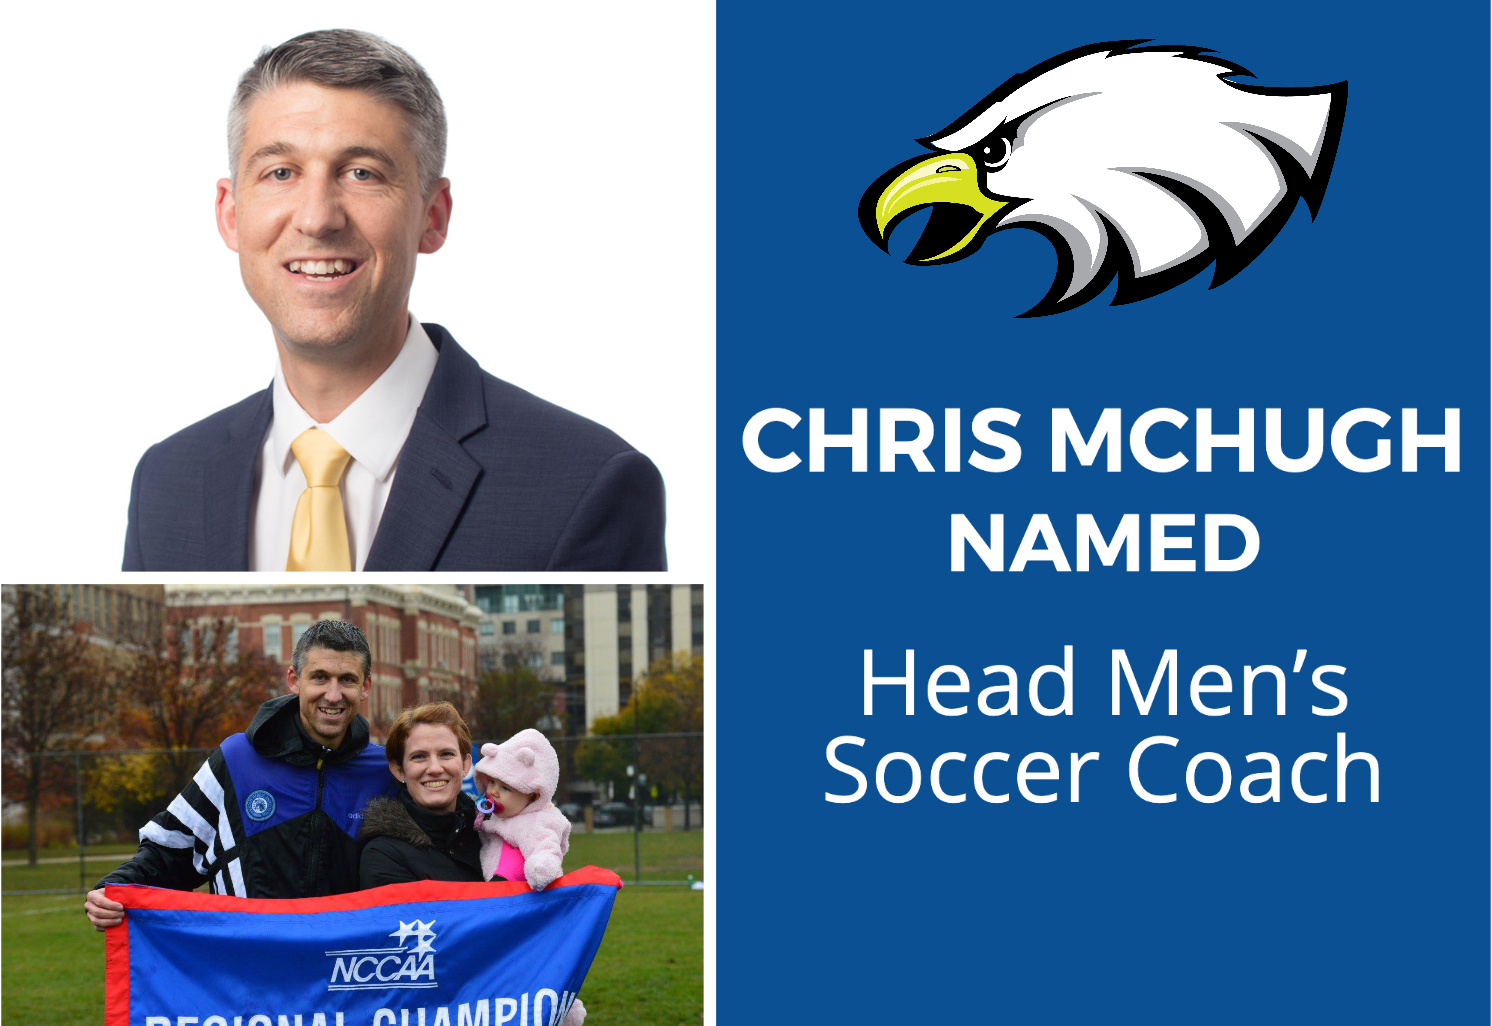 Chris McHugh named Head Men's Soccer Coach